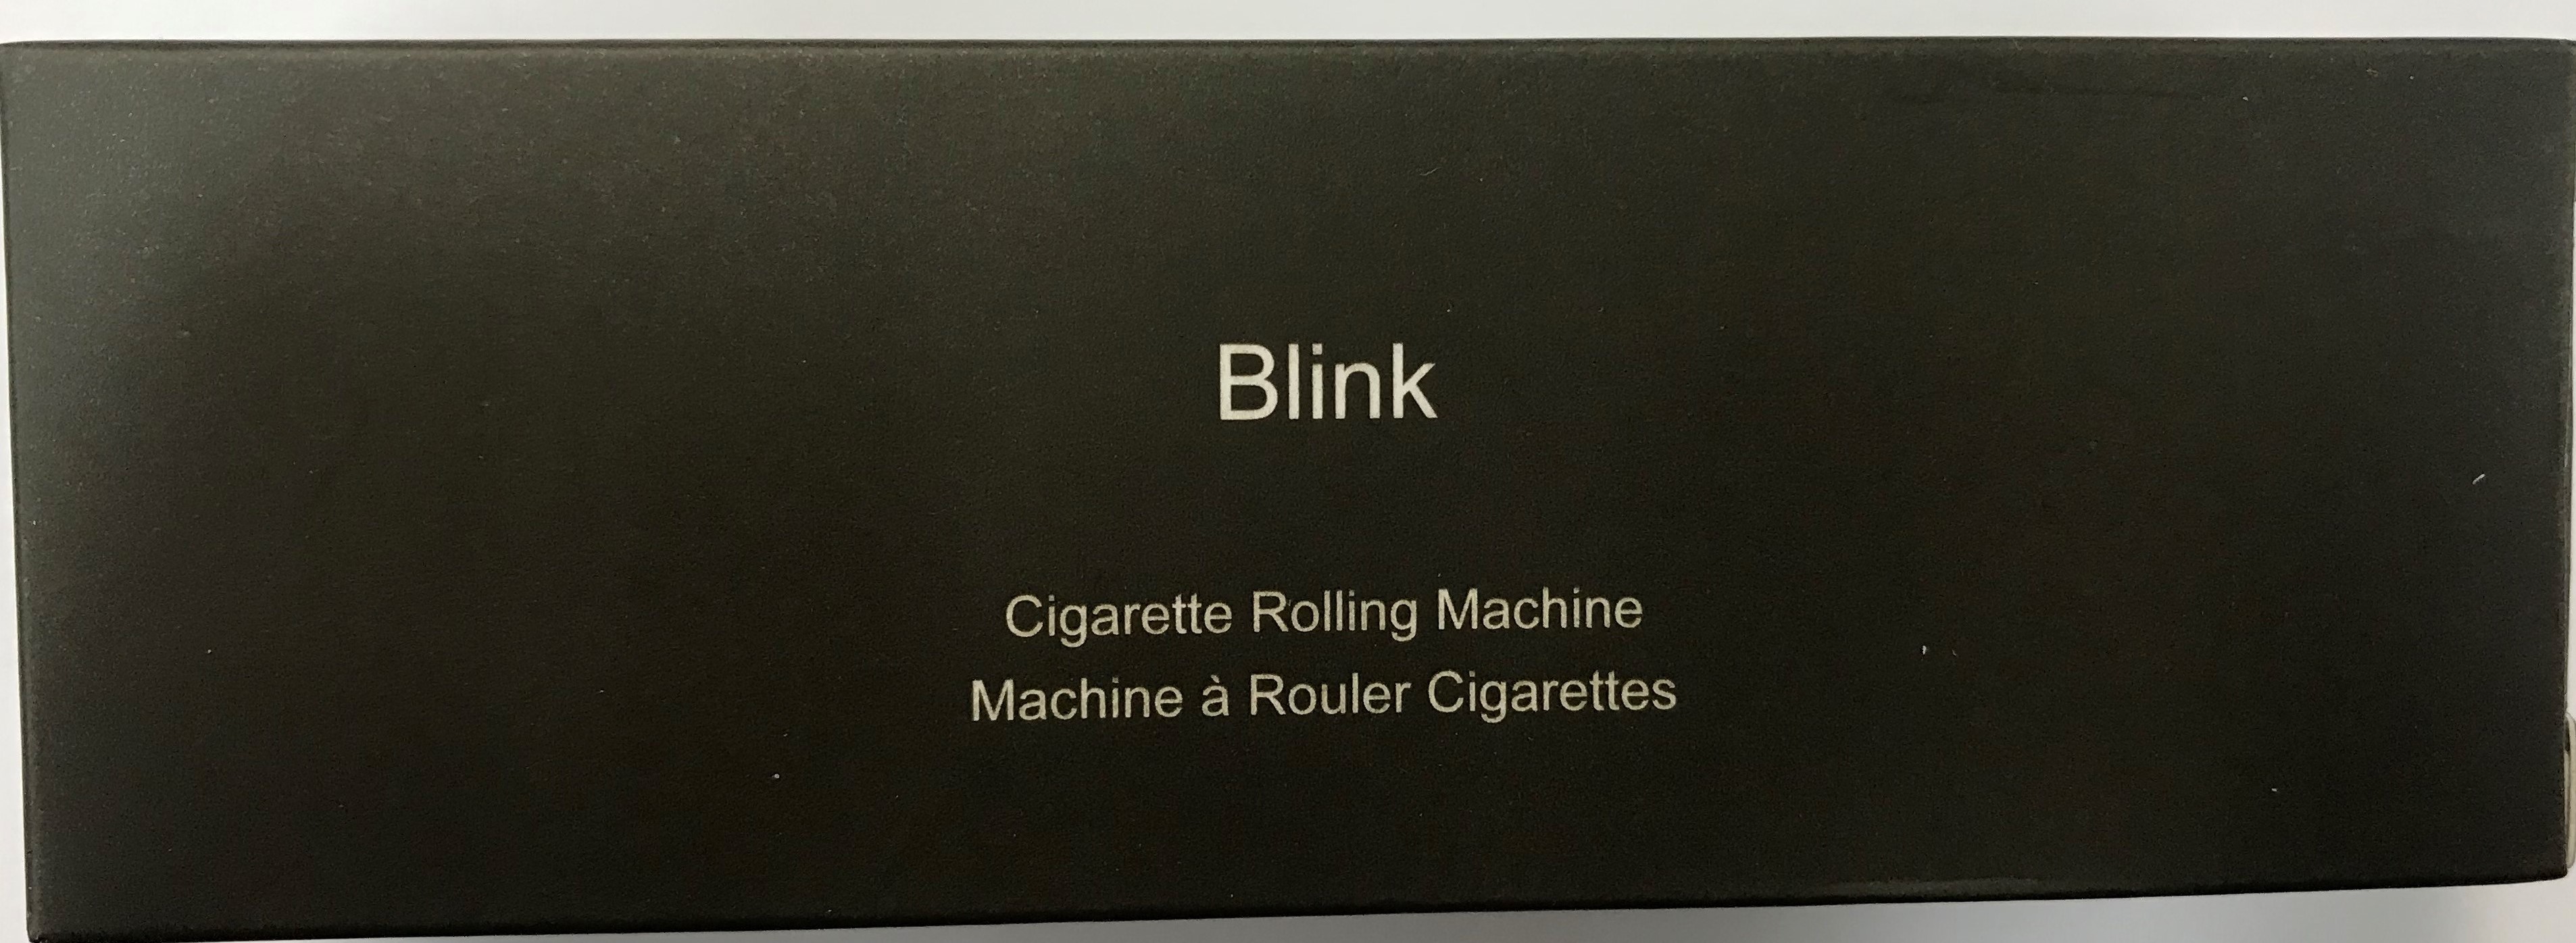 Rolling Machines - Just Cigars n things inc.